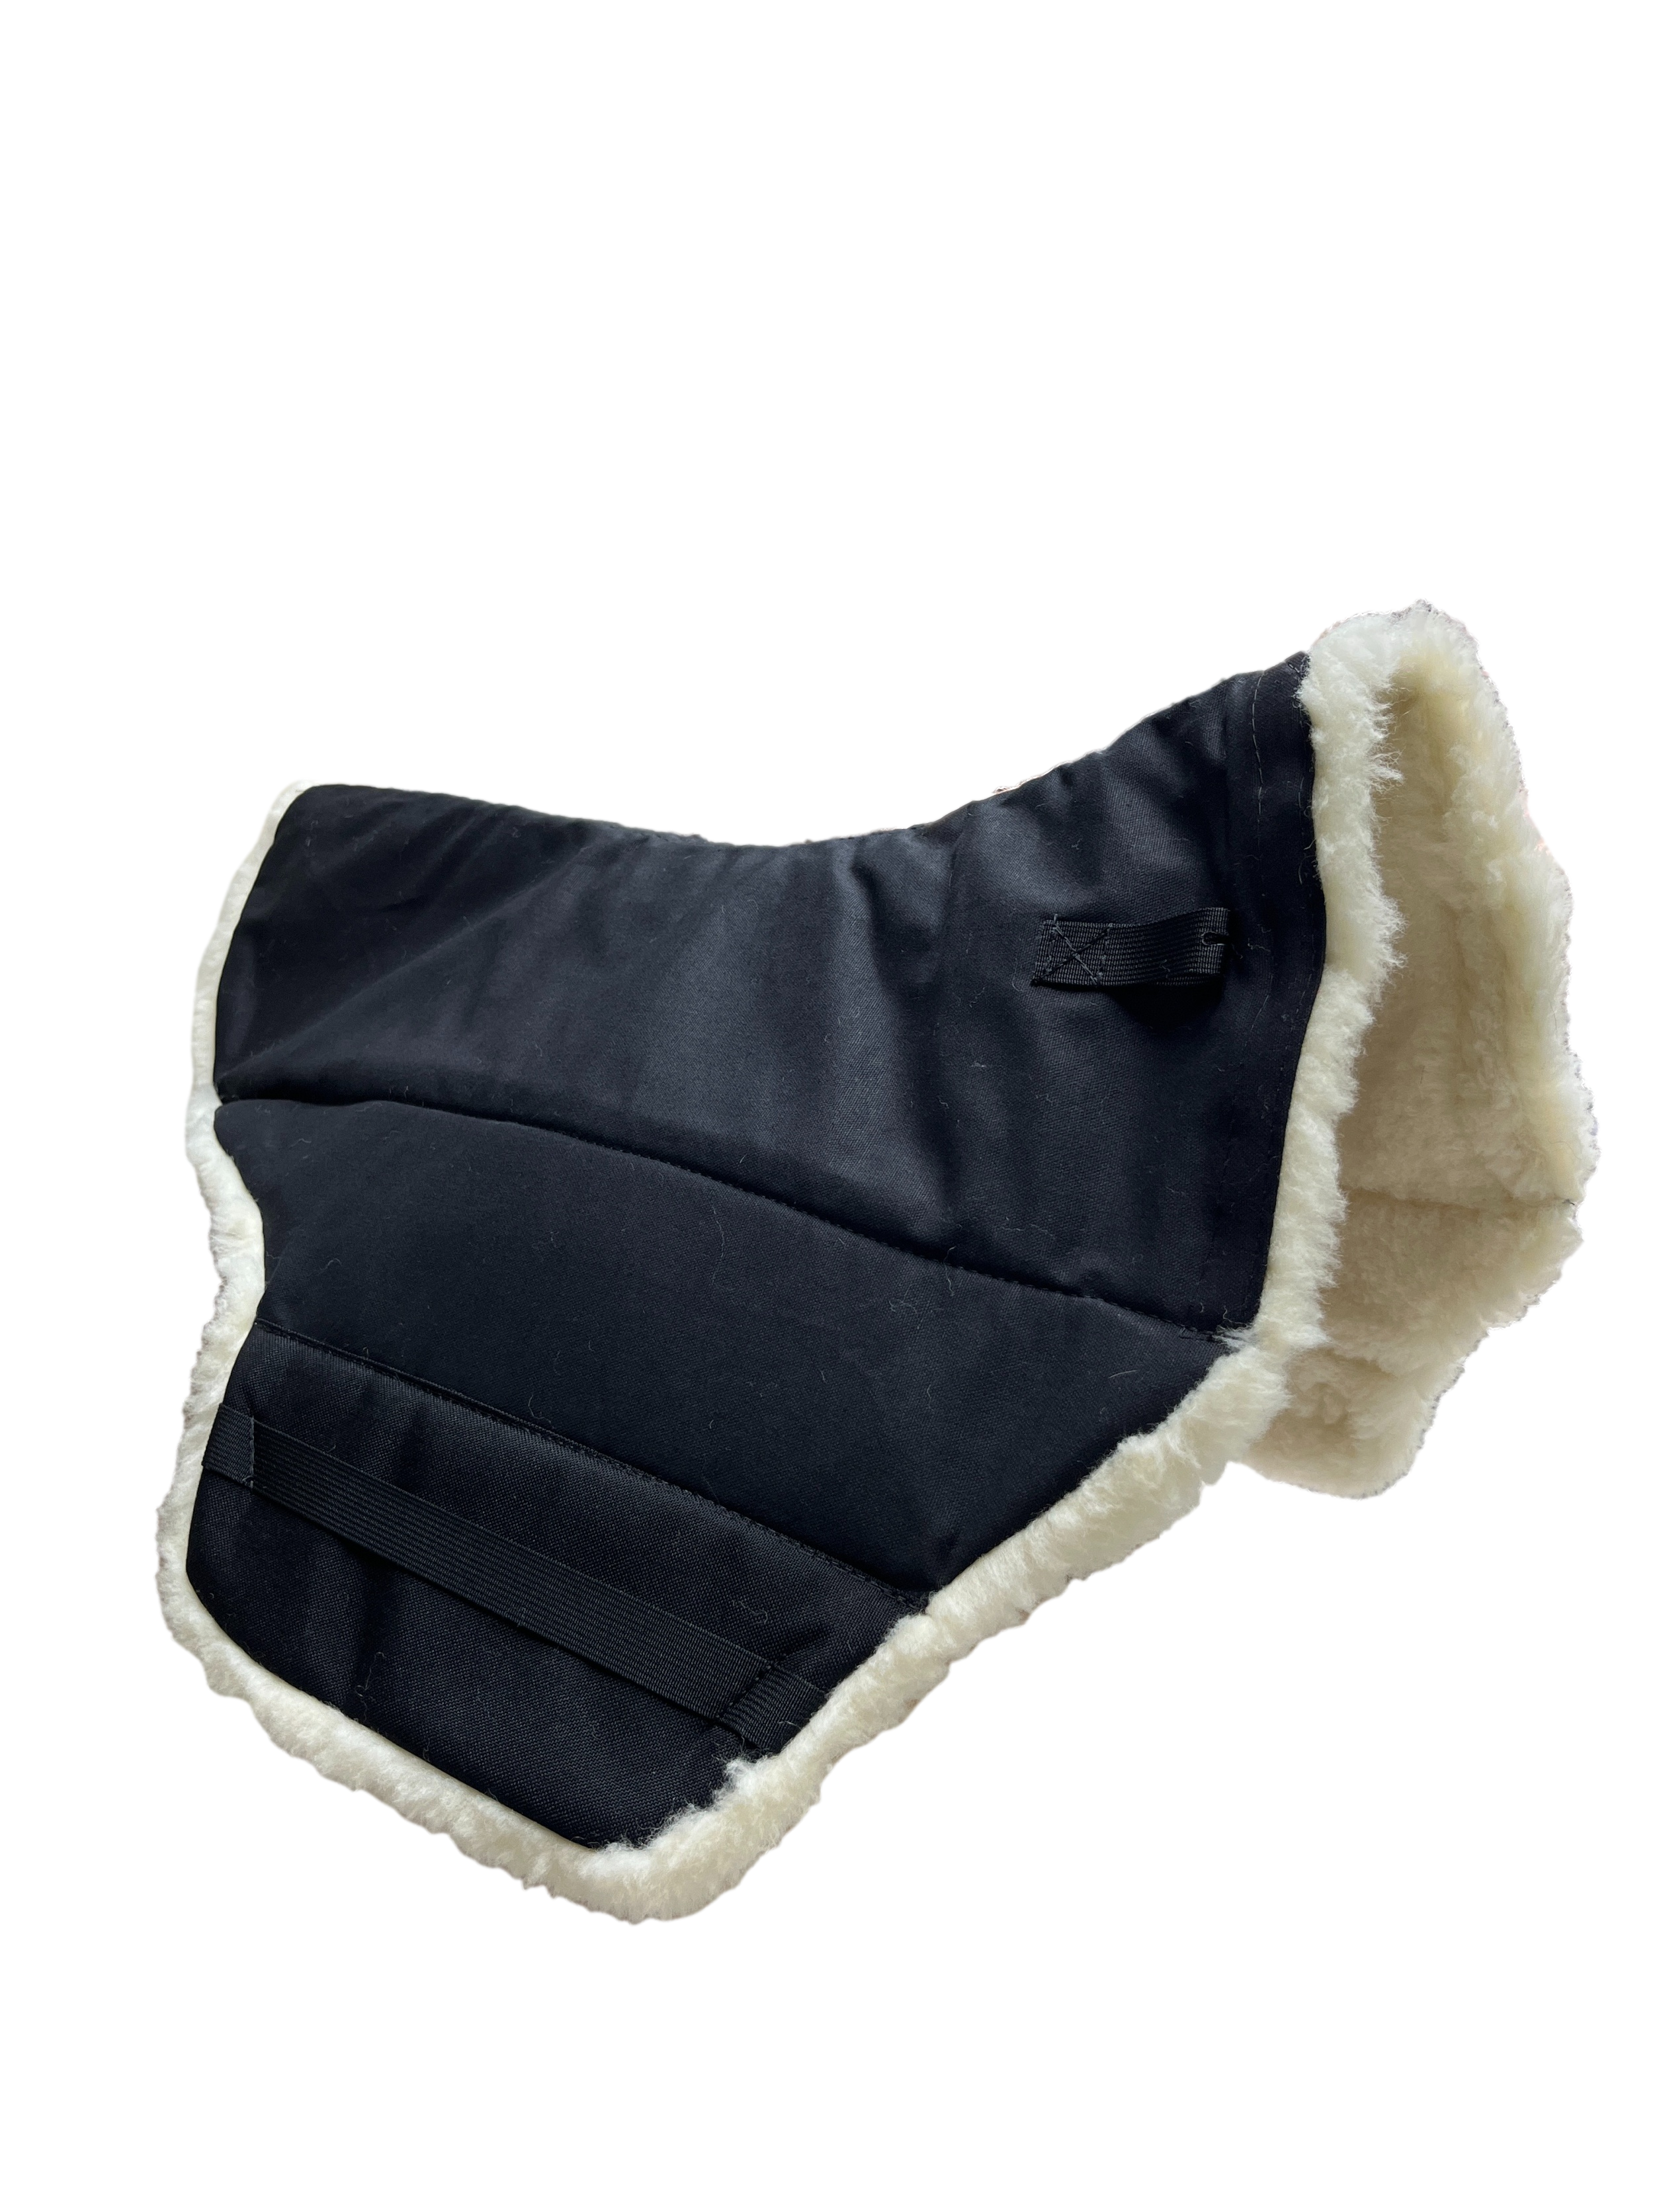 Basic Round Skirt Pad- Medium Firm Foams